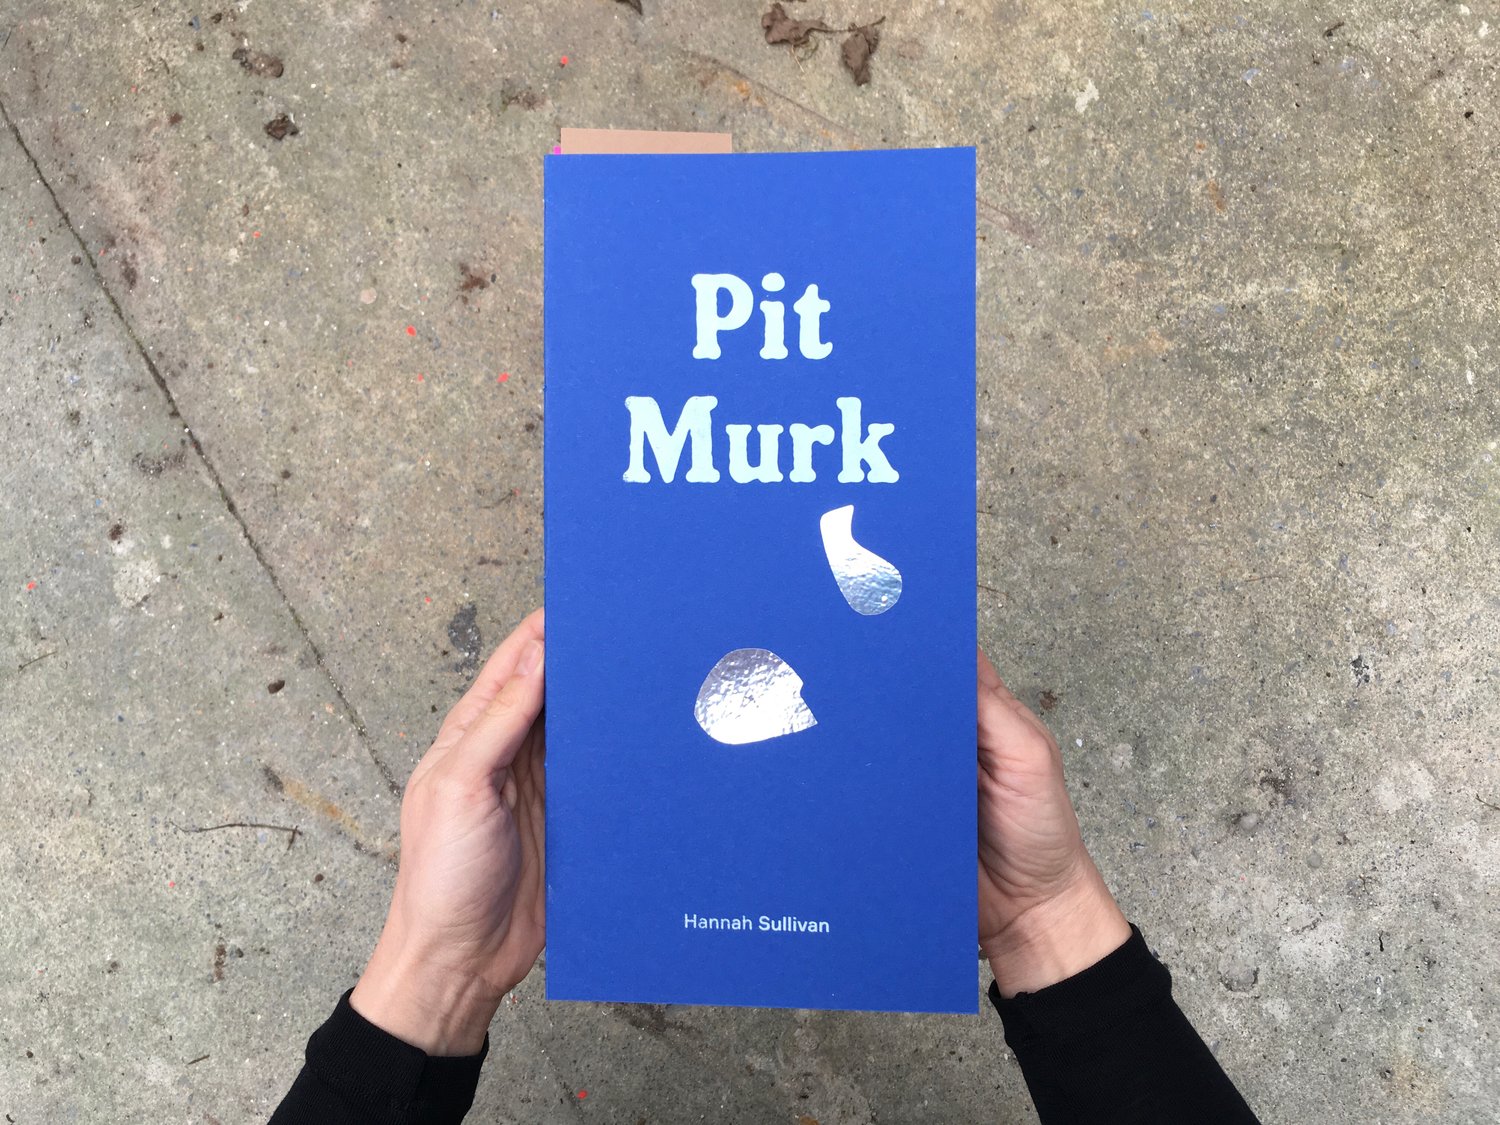 Pit Murk by Hannah Sullivan